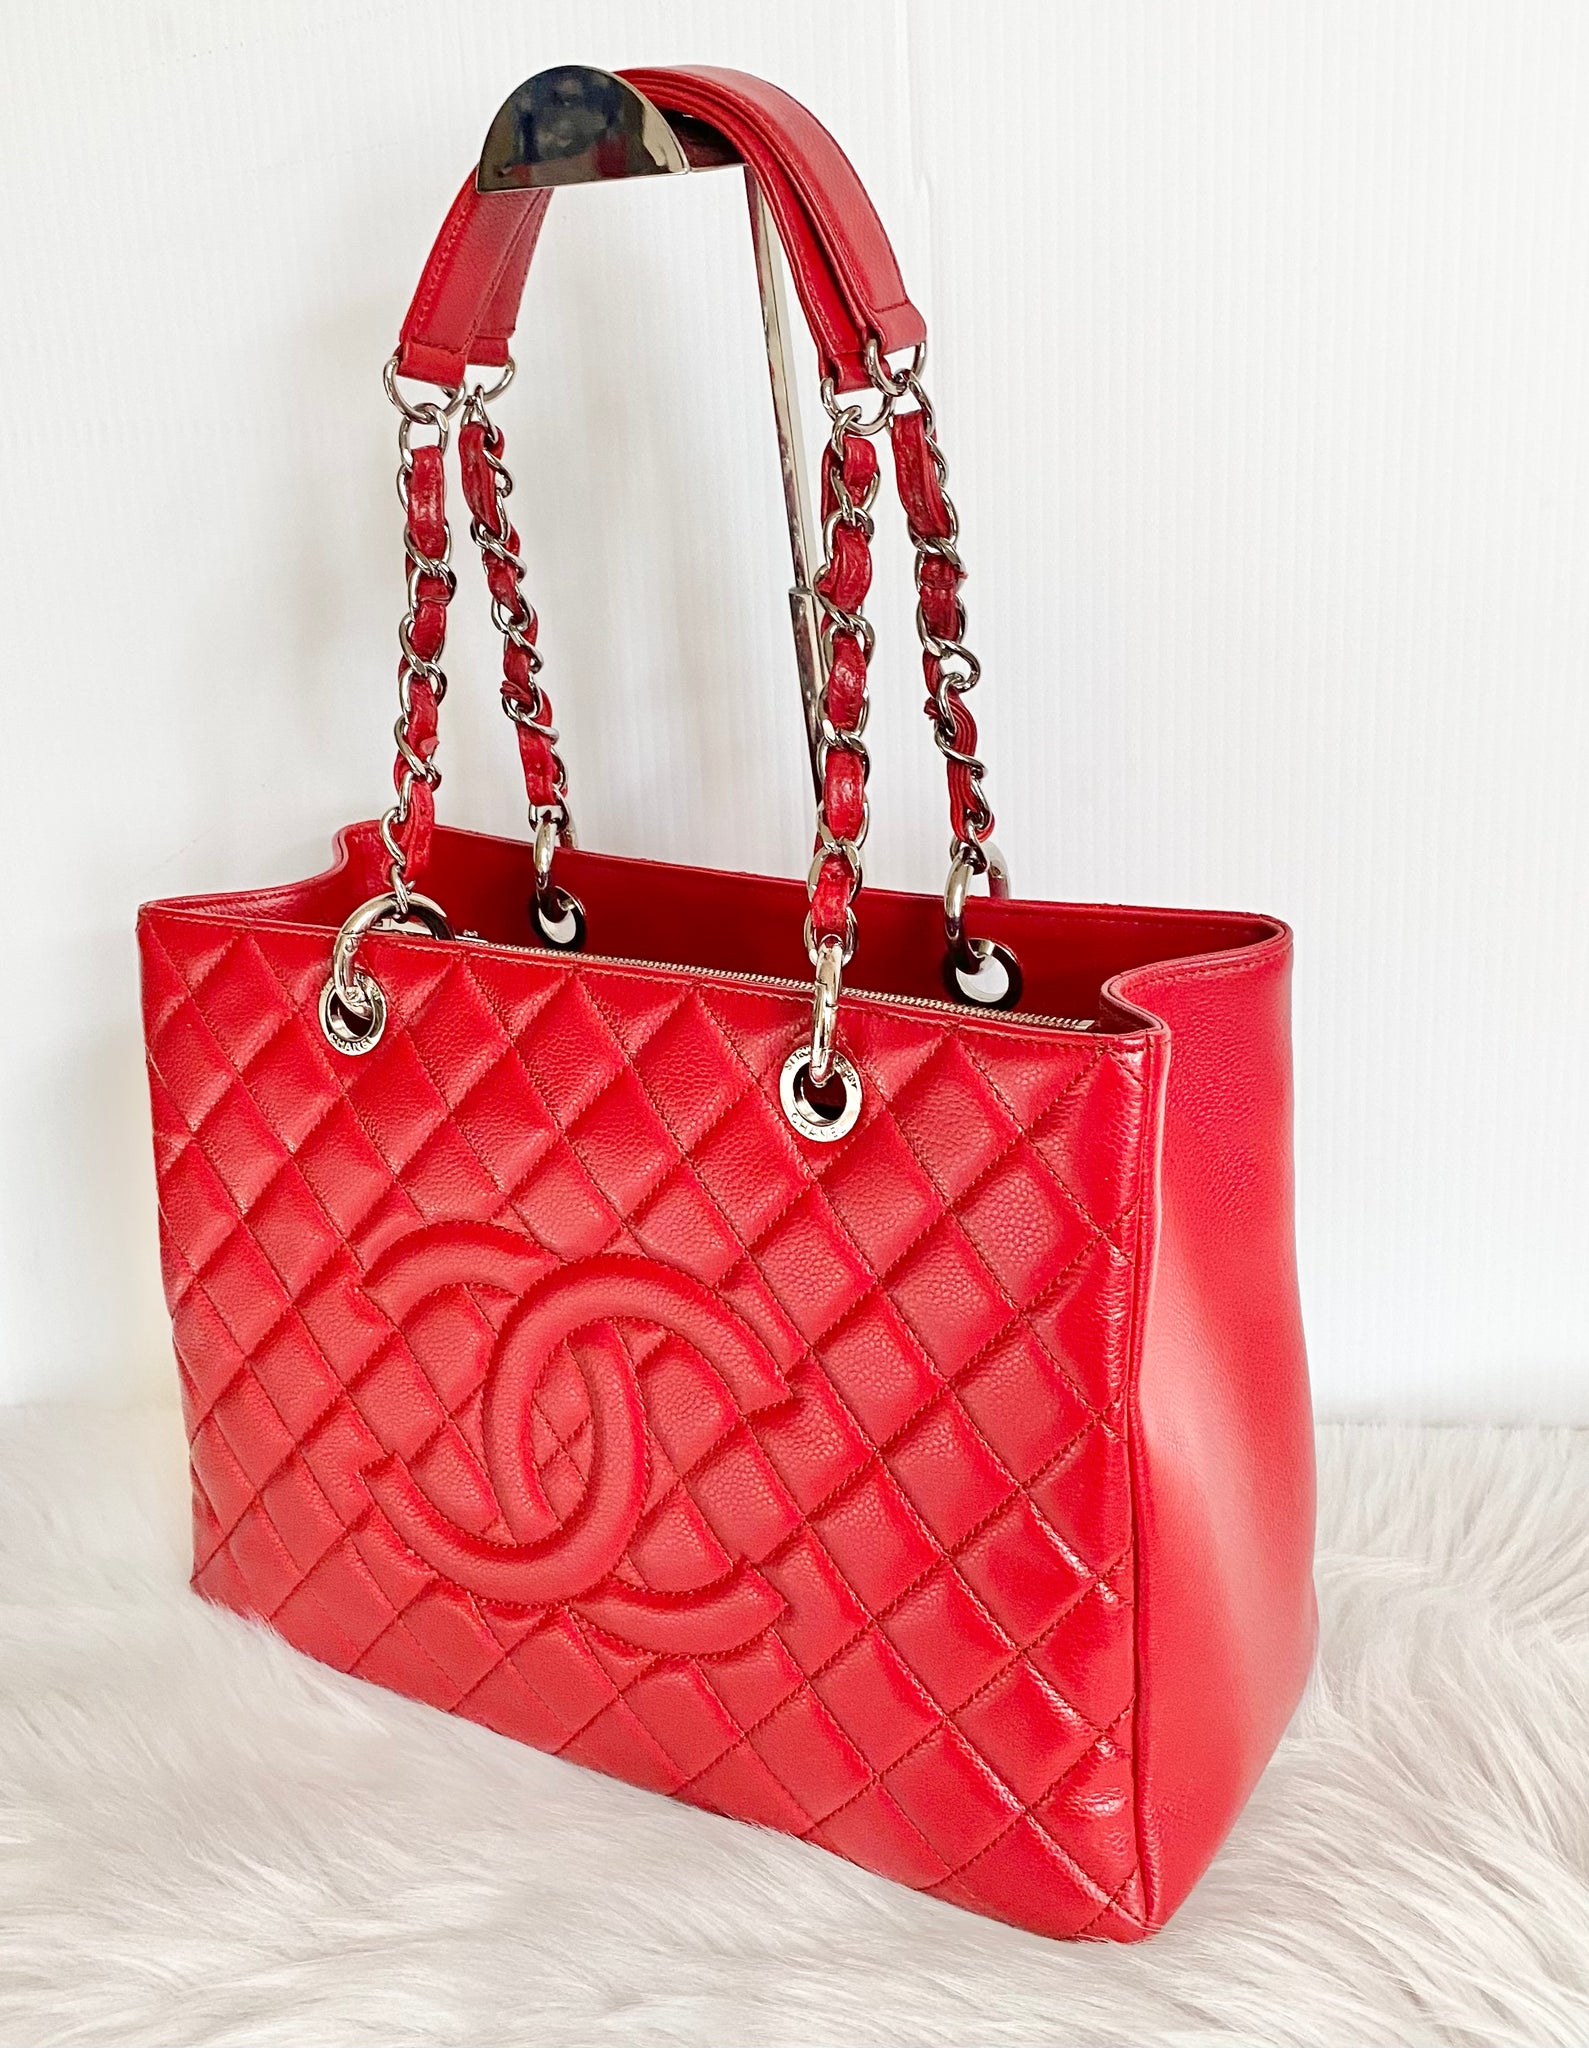 chanel red handbag leather